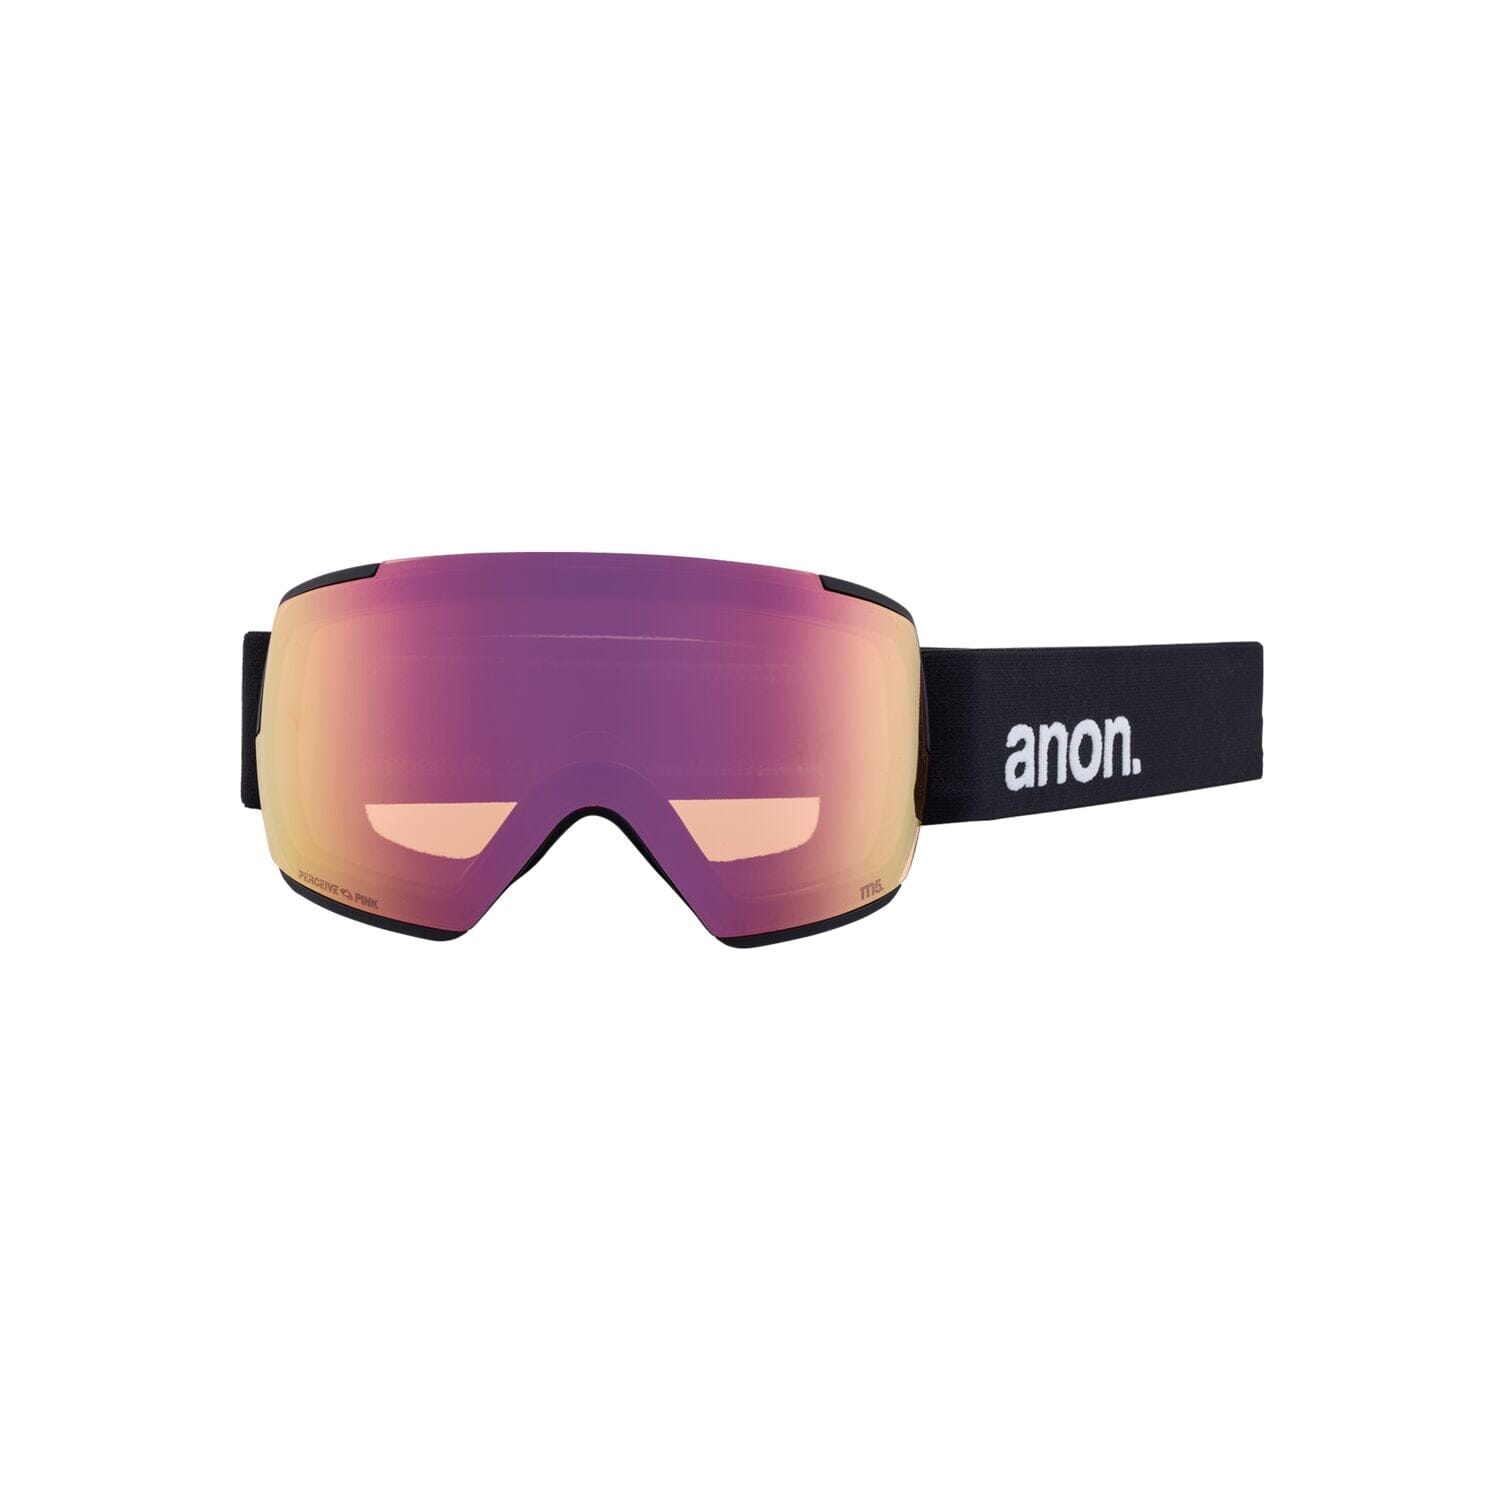 ANON M5 Black - Perceive Sunny Bronze + Perceive Cloudy Burst + MFI Facemask Snow Goggle Snow Goggles Anon 